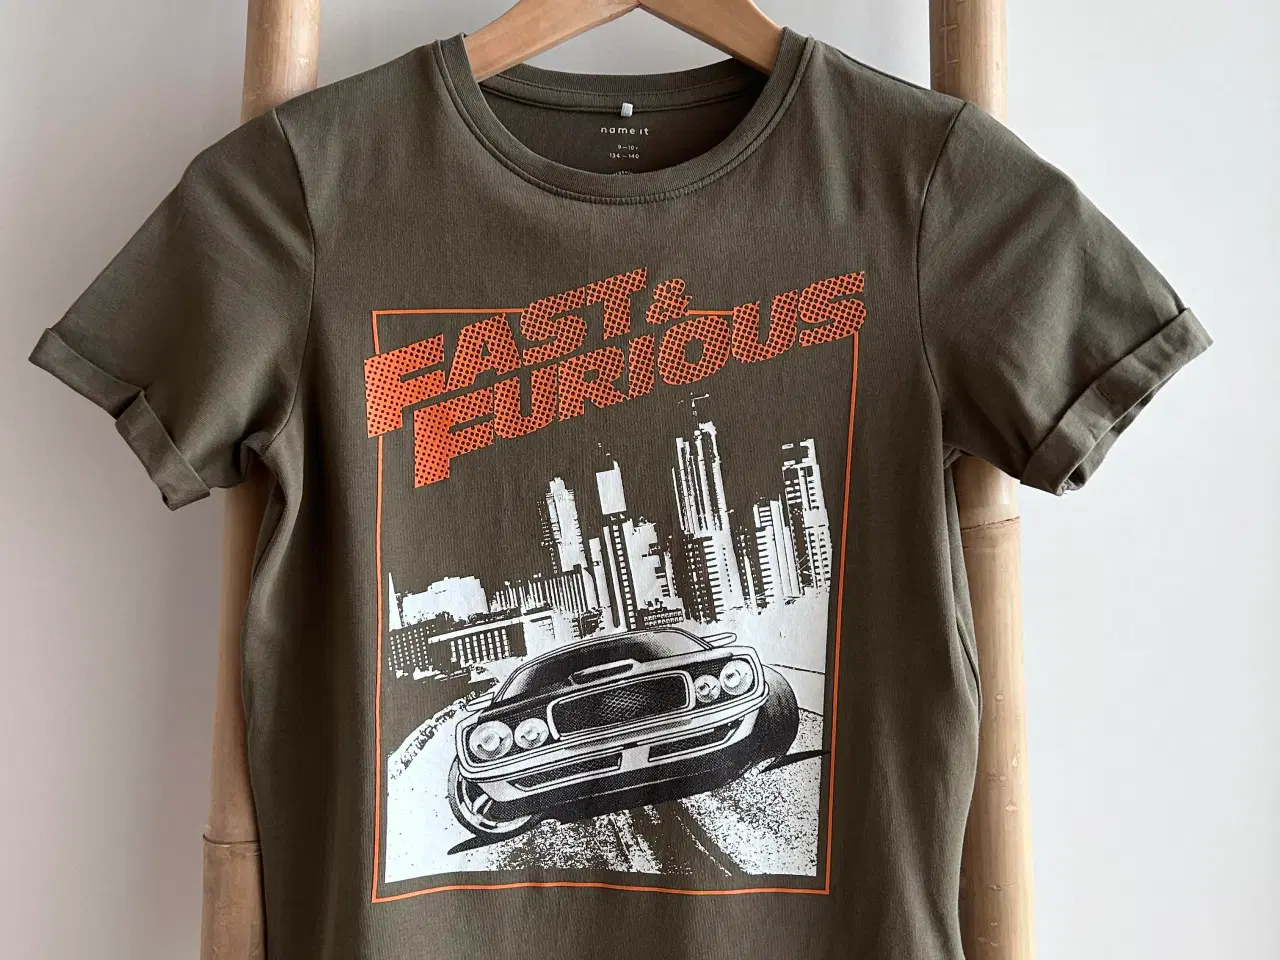 Billede 1 - Name It, 'Fast & Furious', t-shirt, str. 134-140